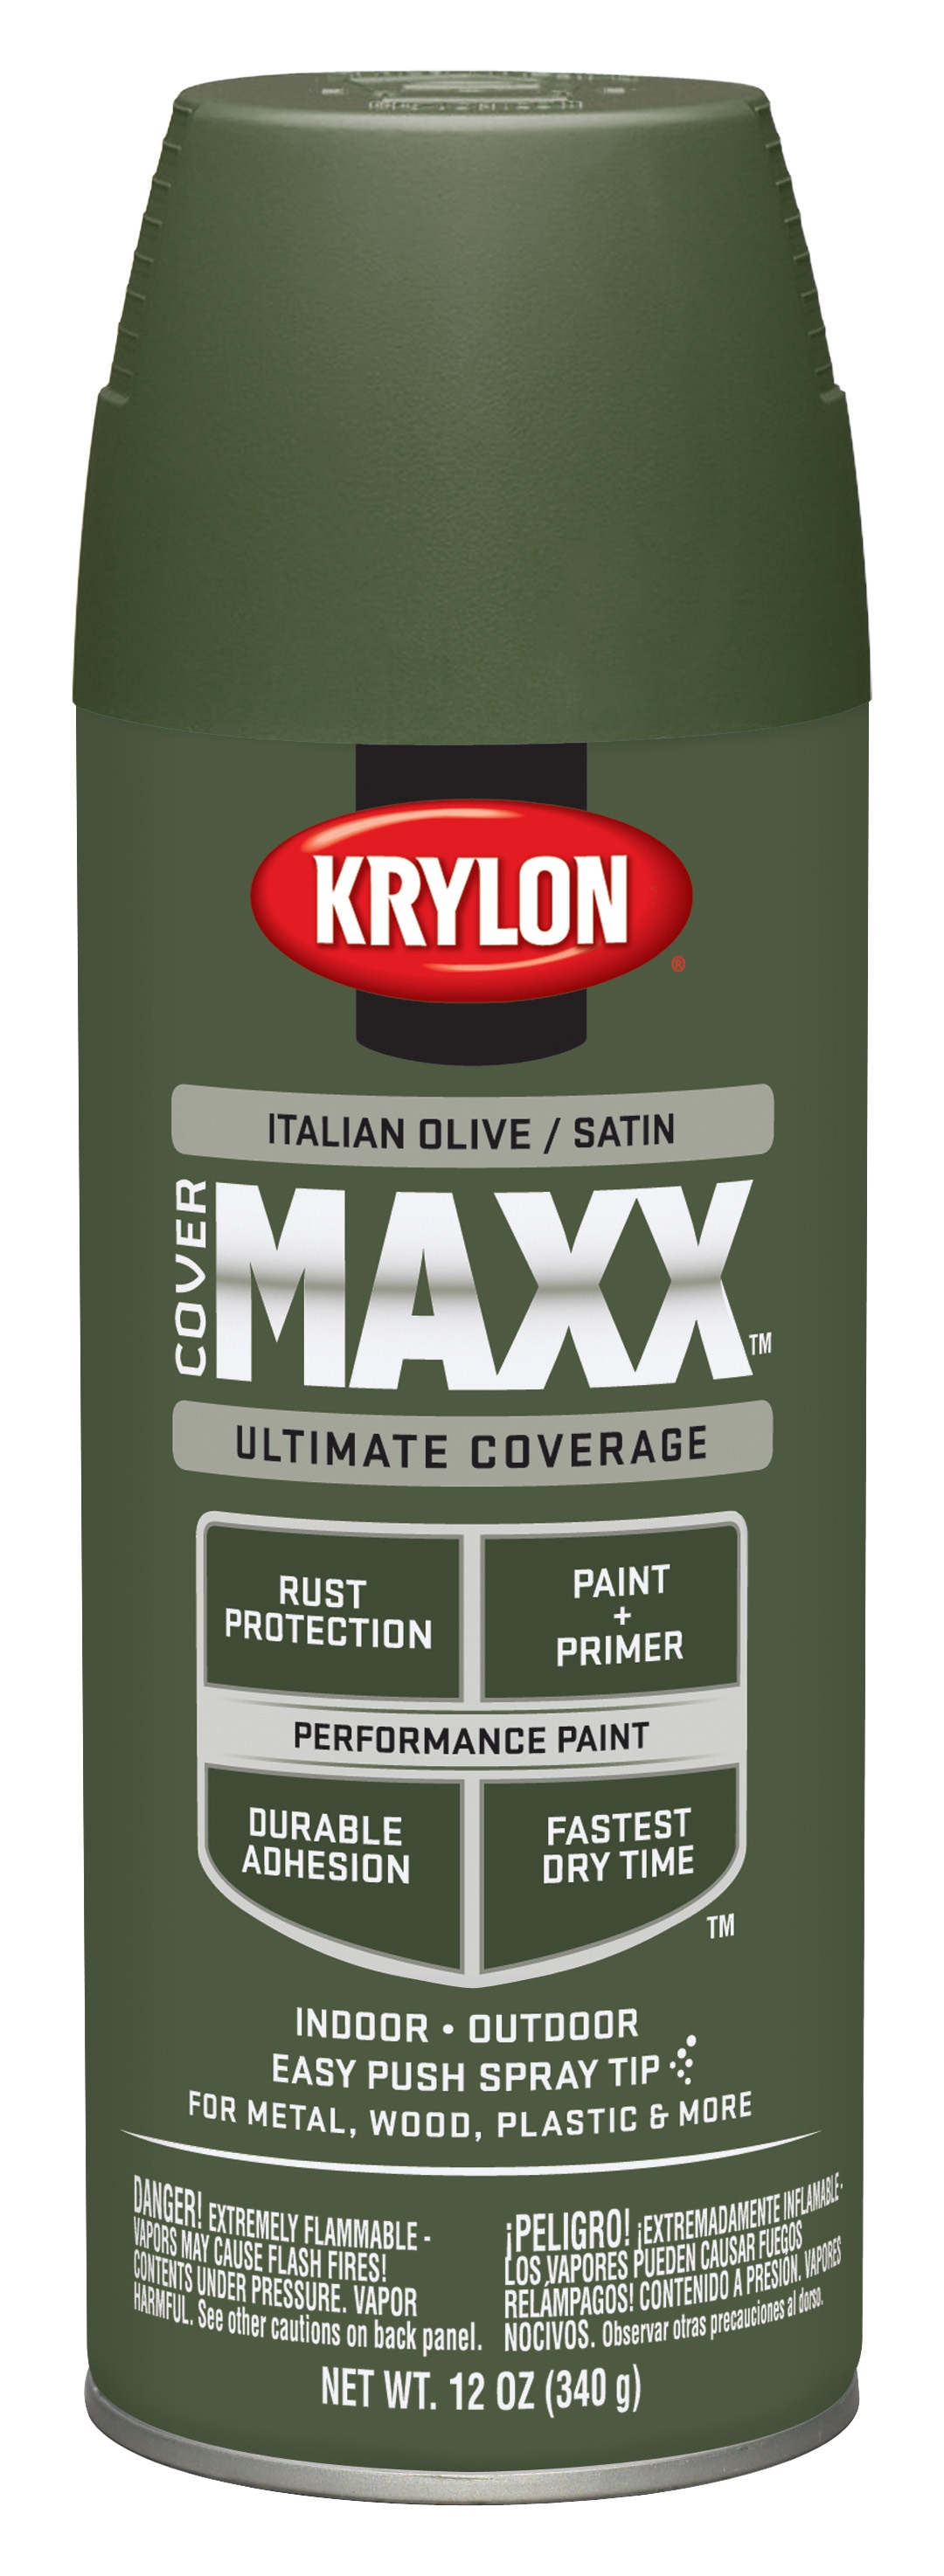 Krylon Professional Satin Stainless Steel Spray Paint (NET WT. 15-oz) at